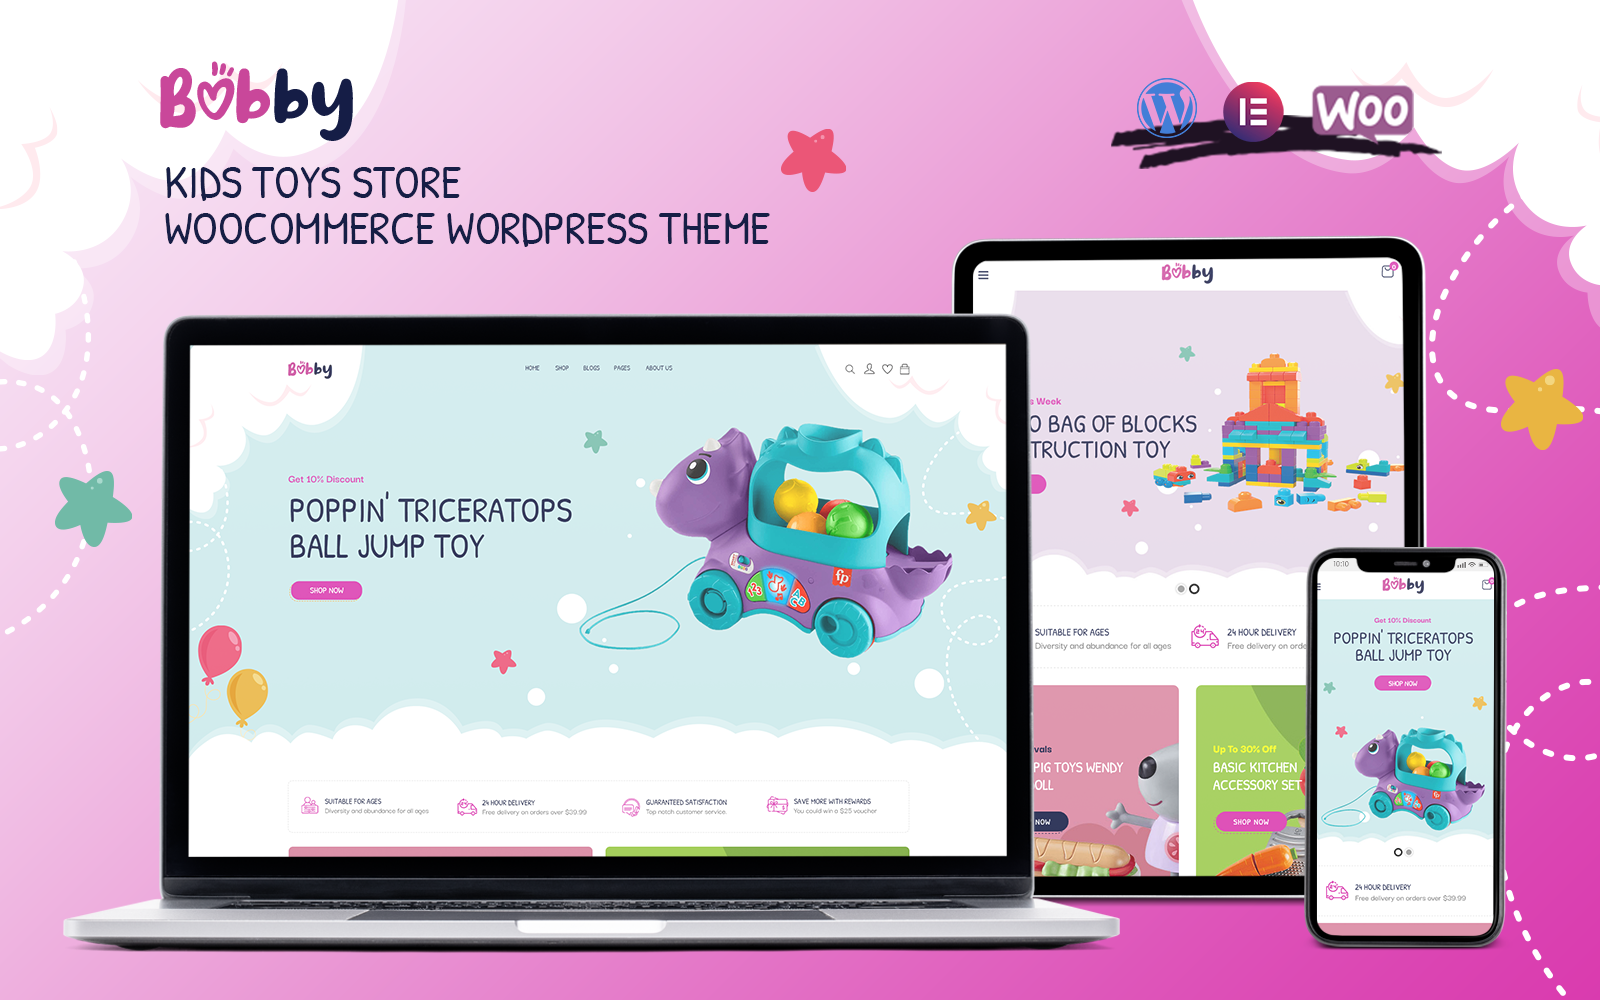 Bobby - Kids Toys Store WooCommerce WordPress Theme